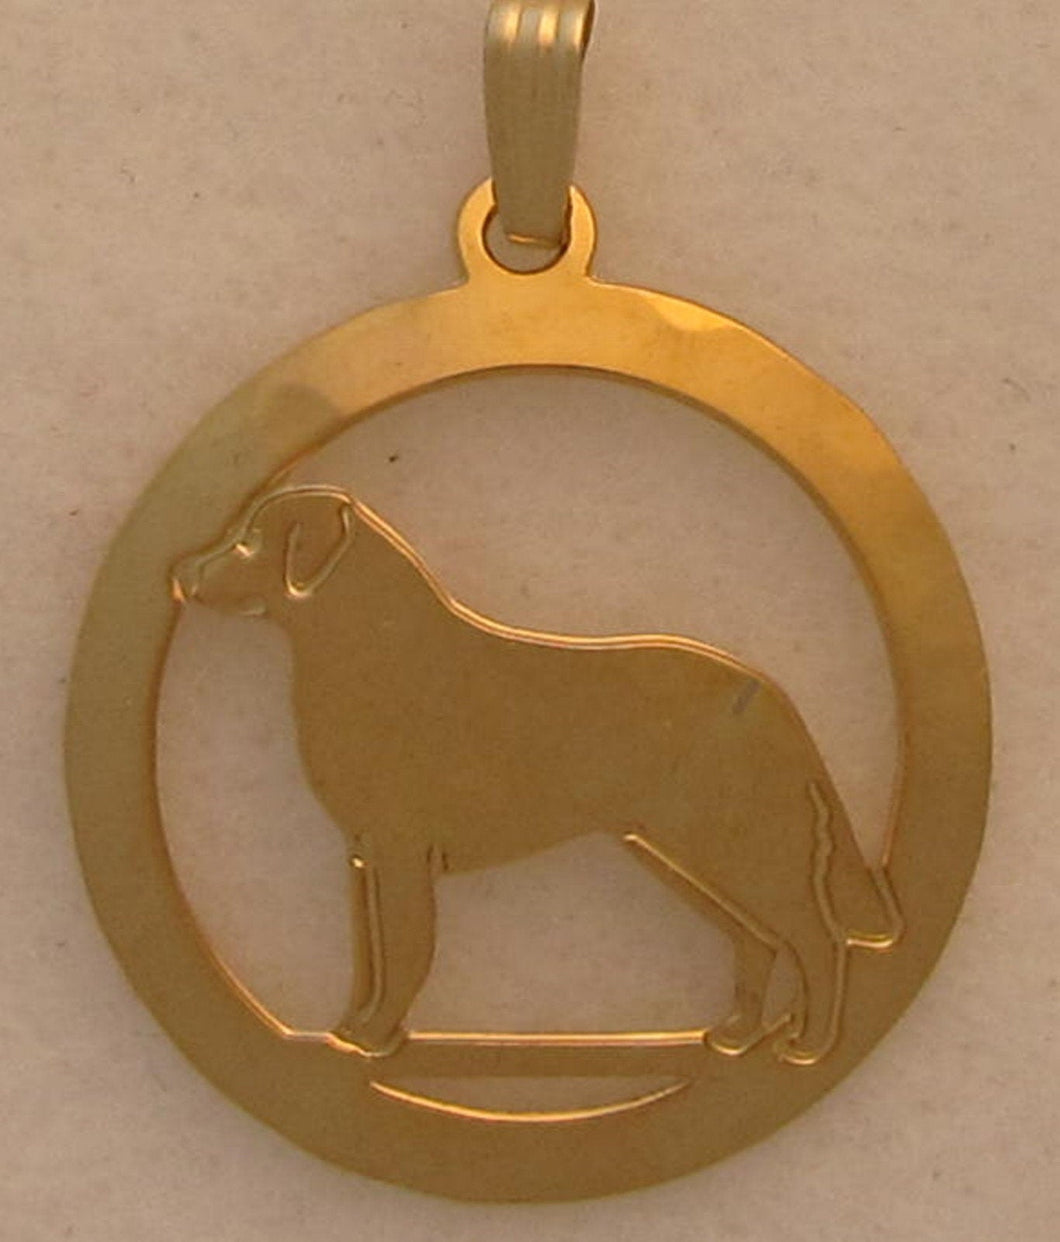 Kuvasz Pendant by Touchstone Dog Designs // Kuvasz Jewelry // Dog Breed Jewelry for People